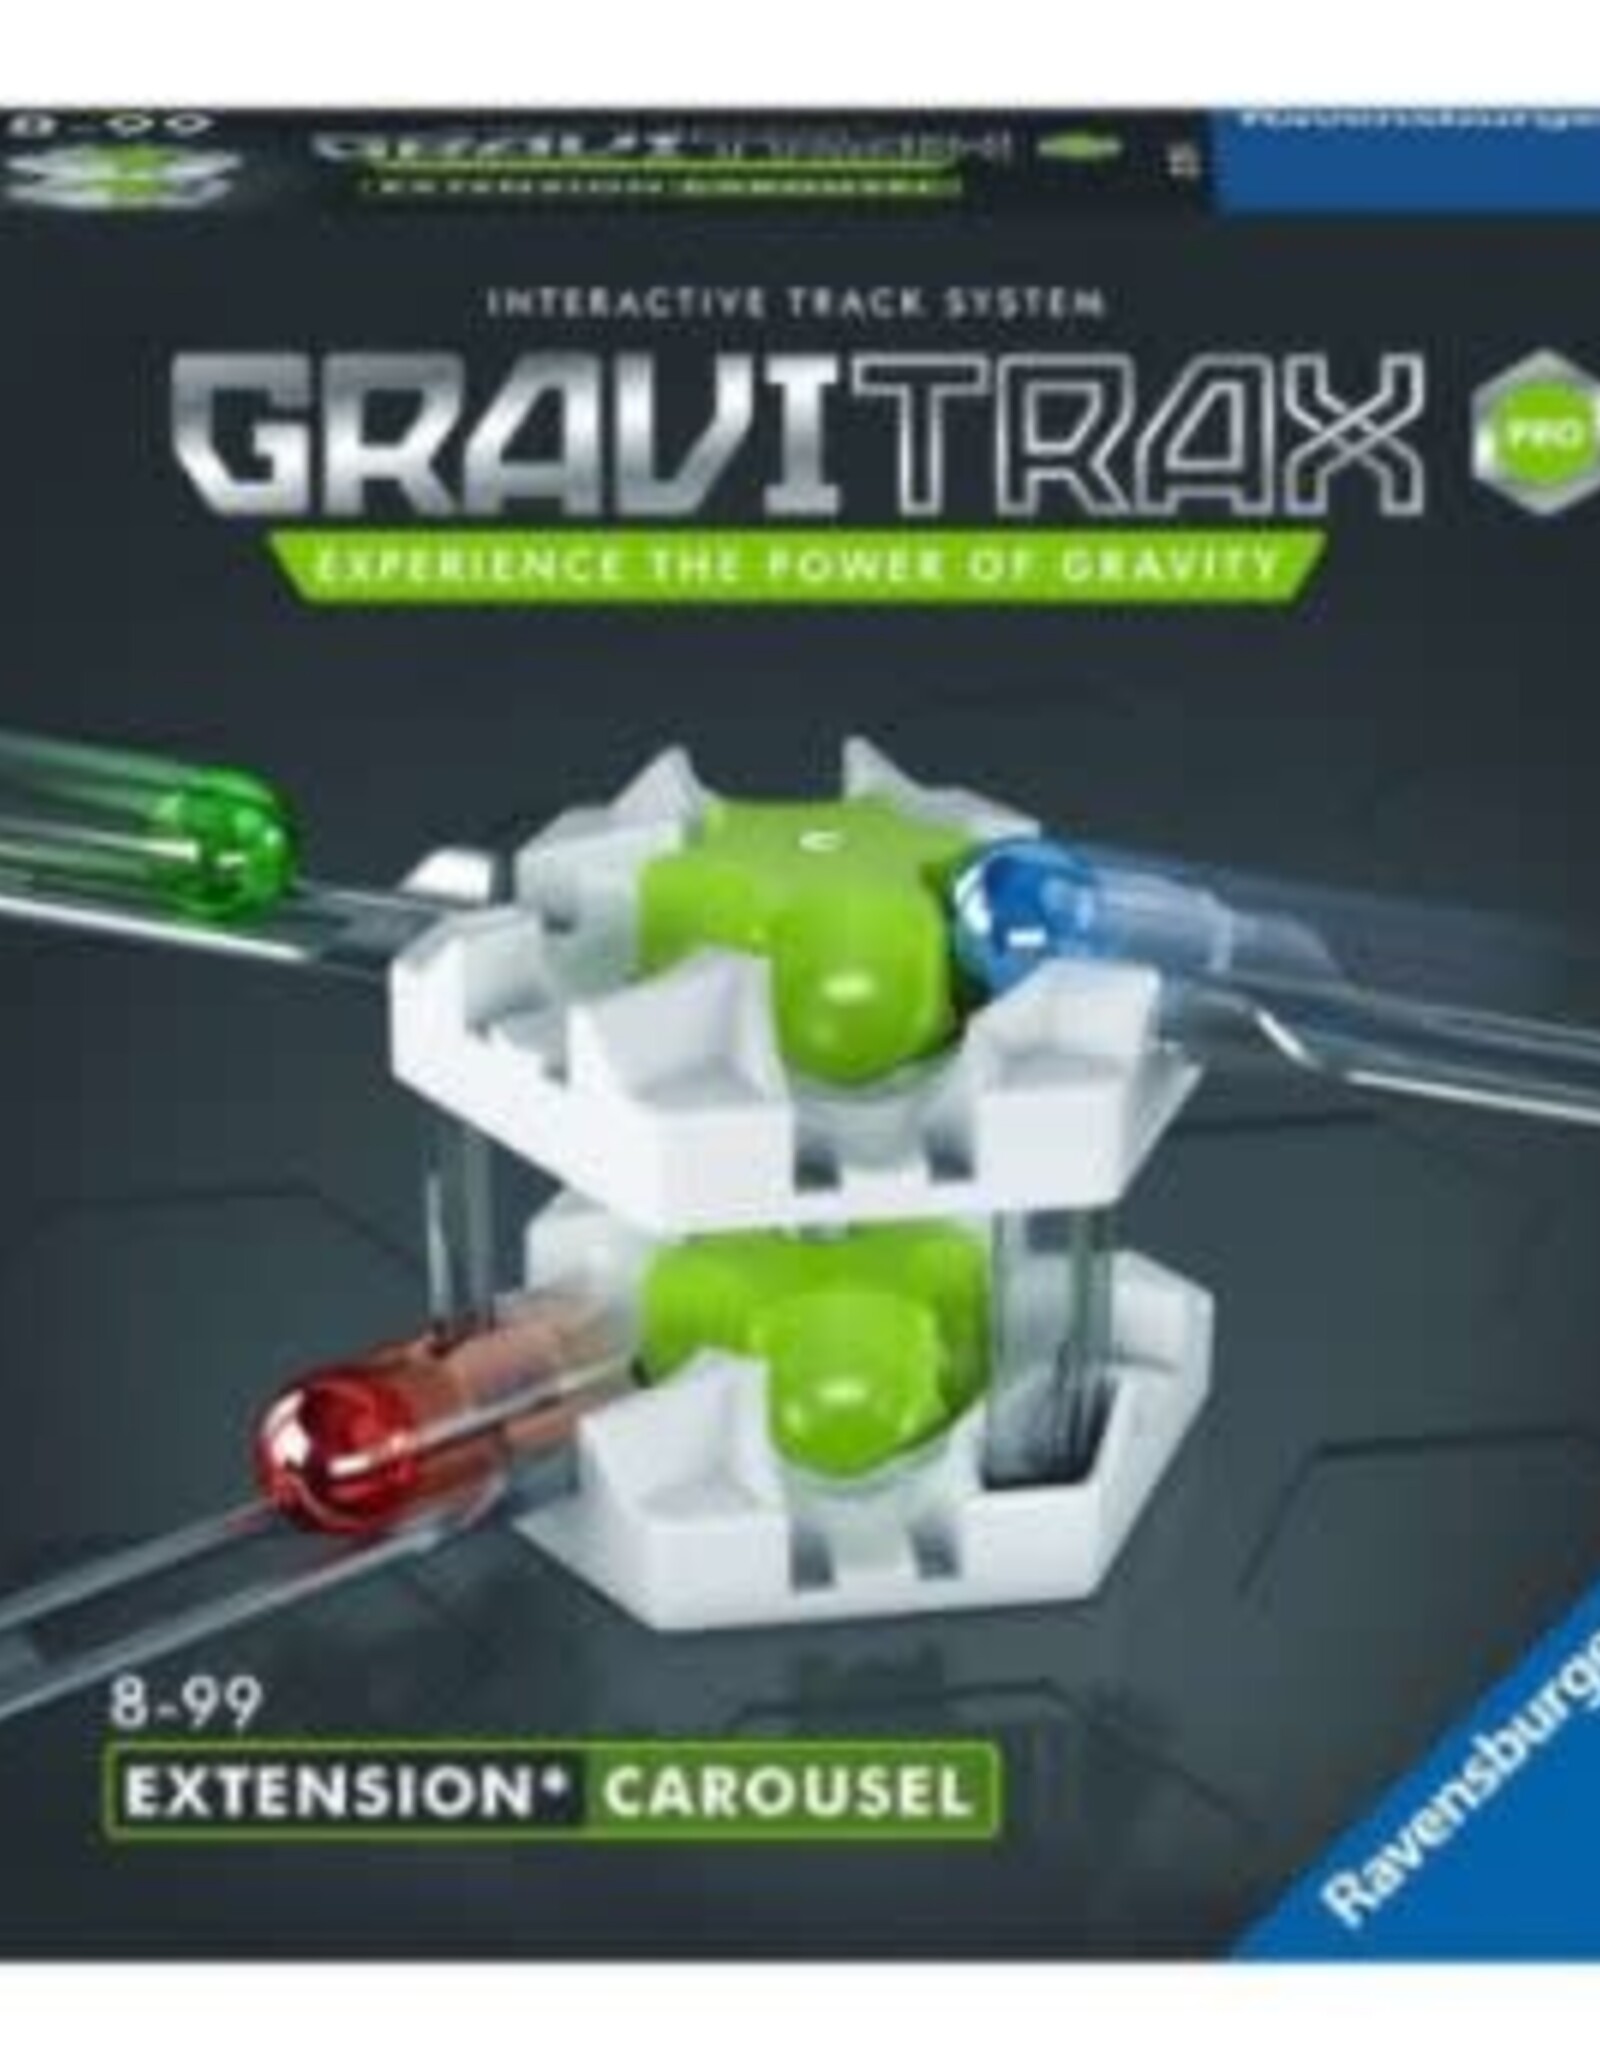 GraviTrax GraviTrax PRO Carousel